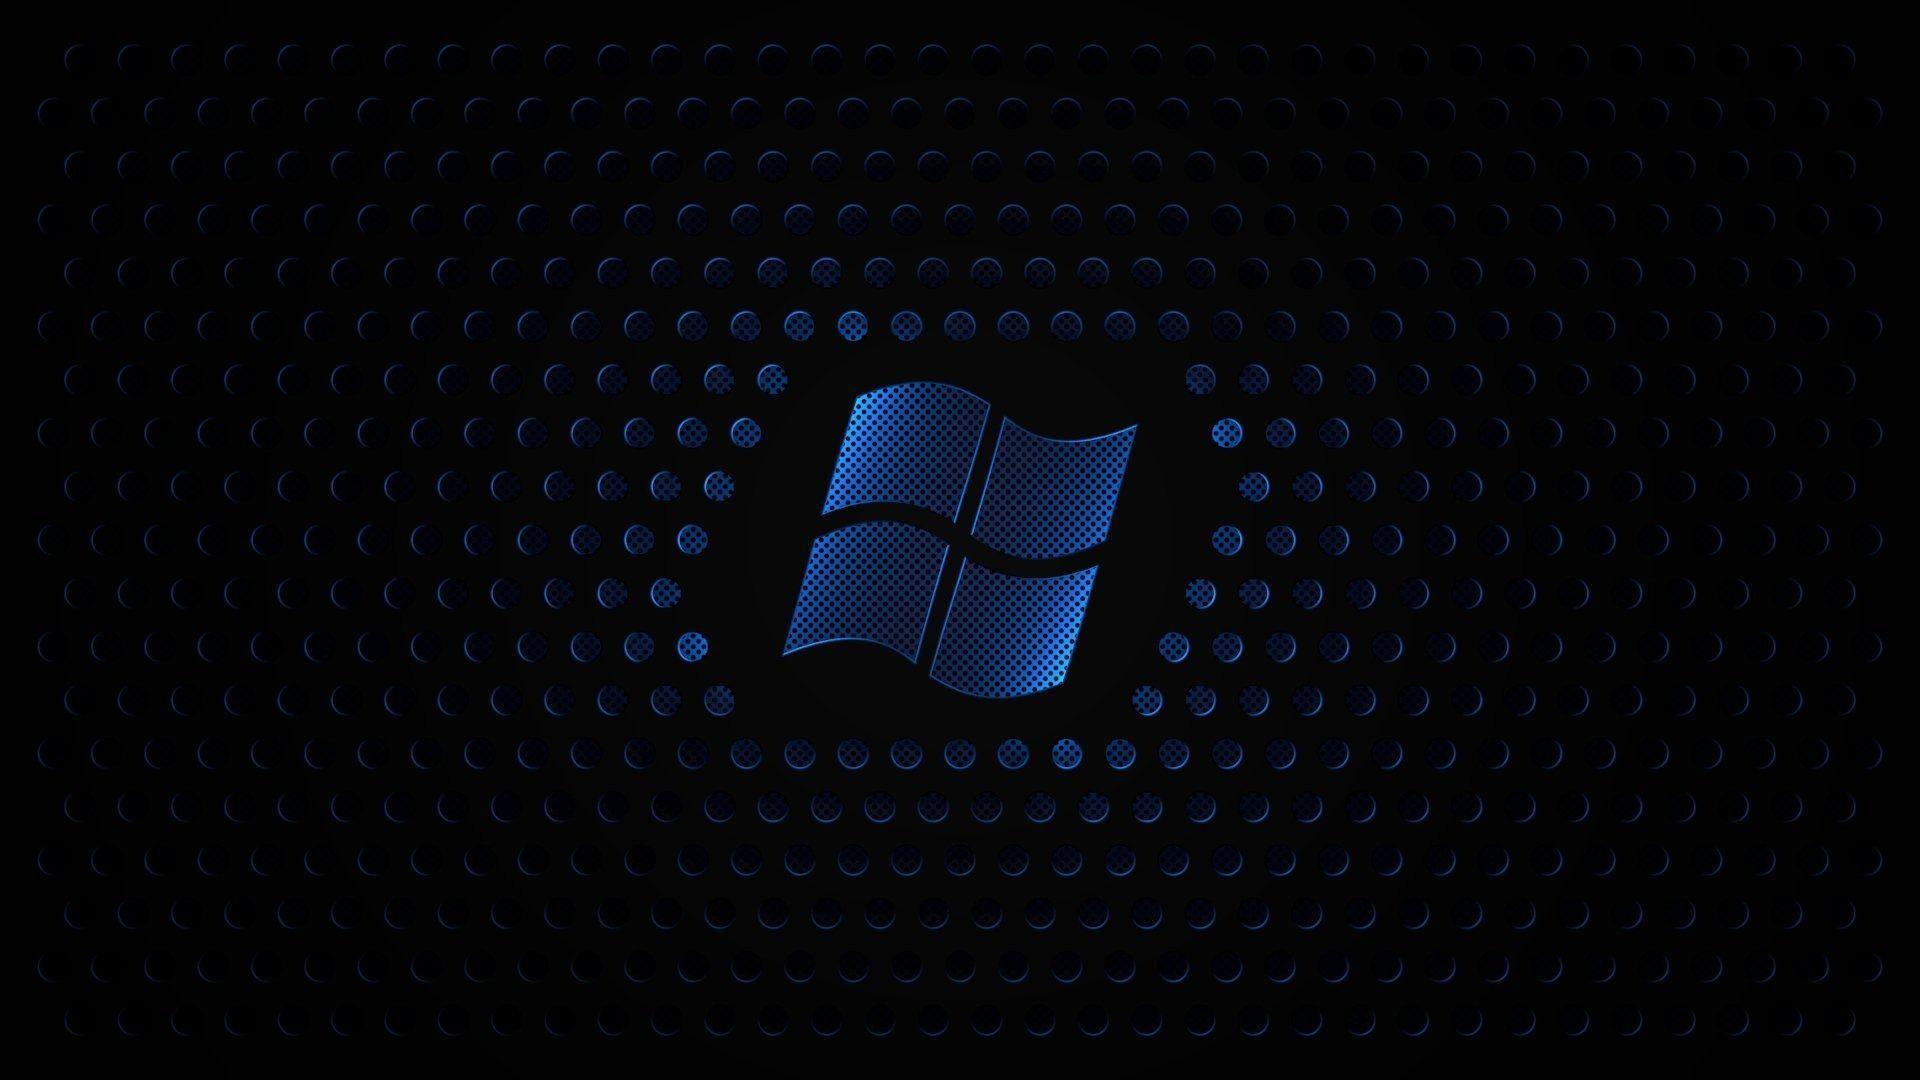 Windows 7 Blue Rays HD large resolution desktop background